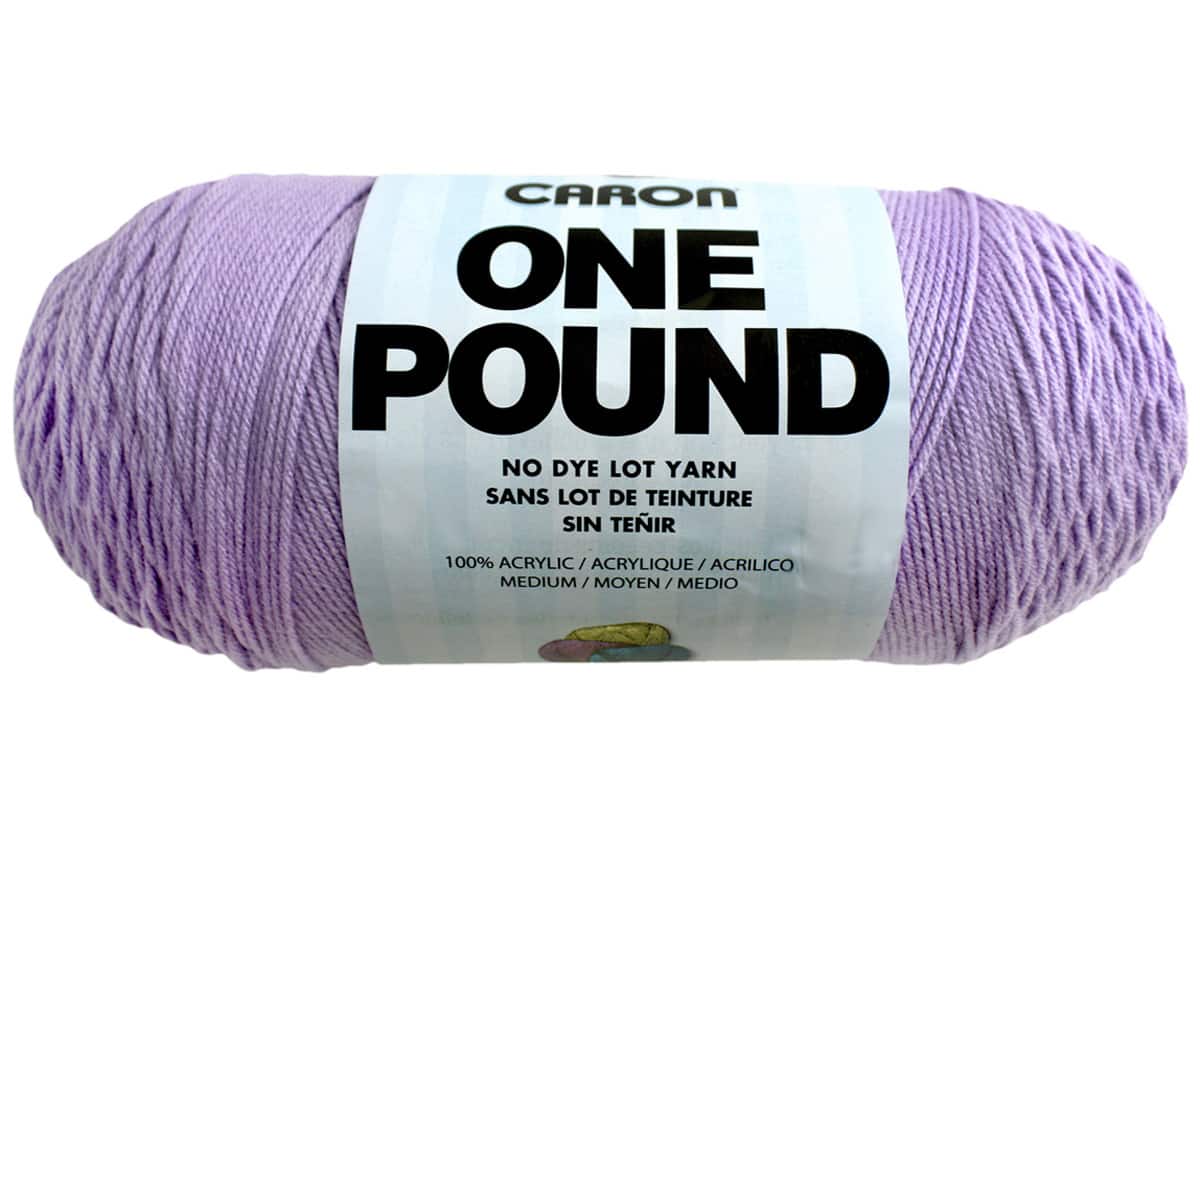 Caron One Pound Yarn Review